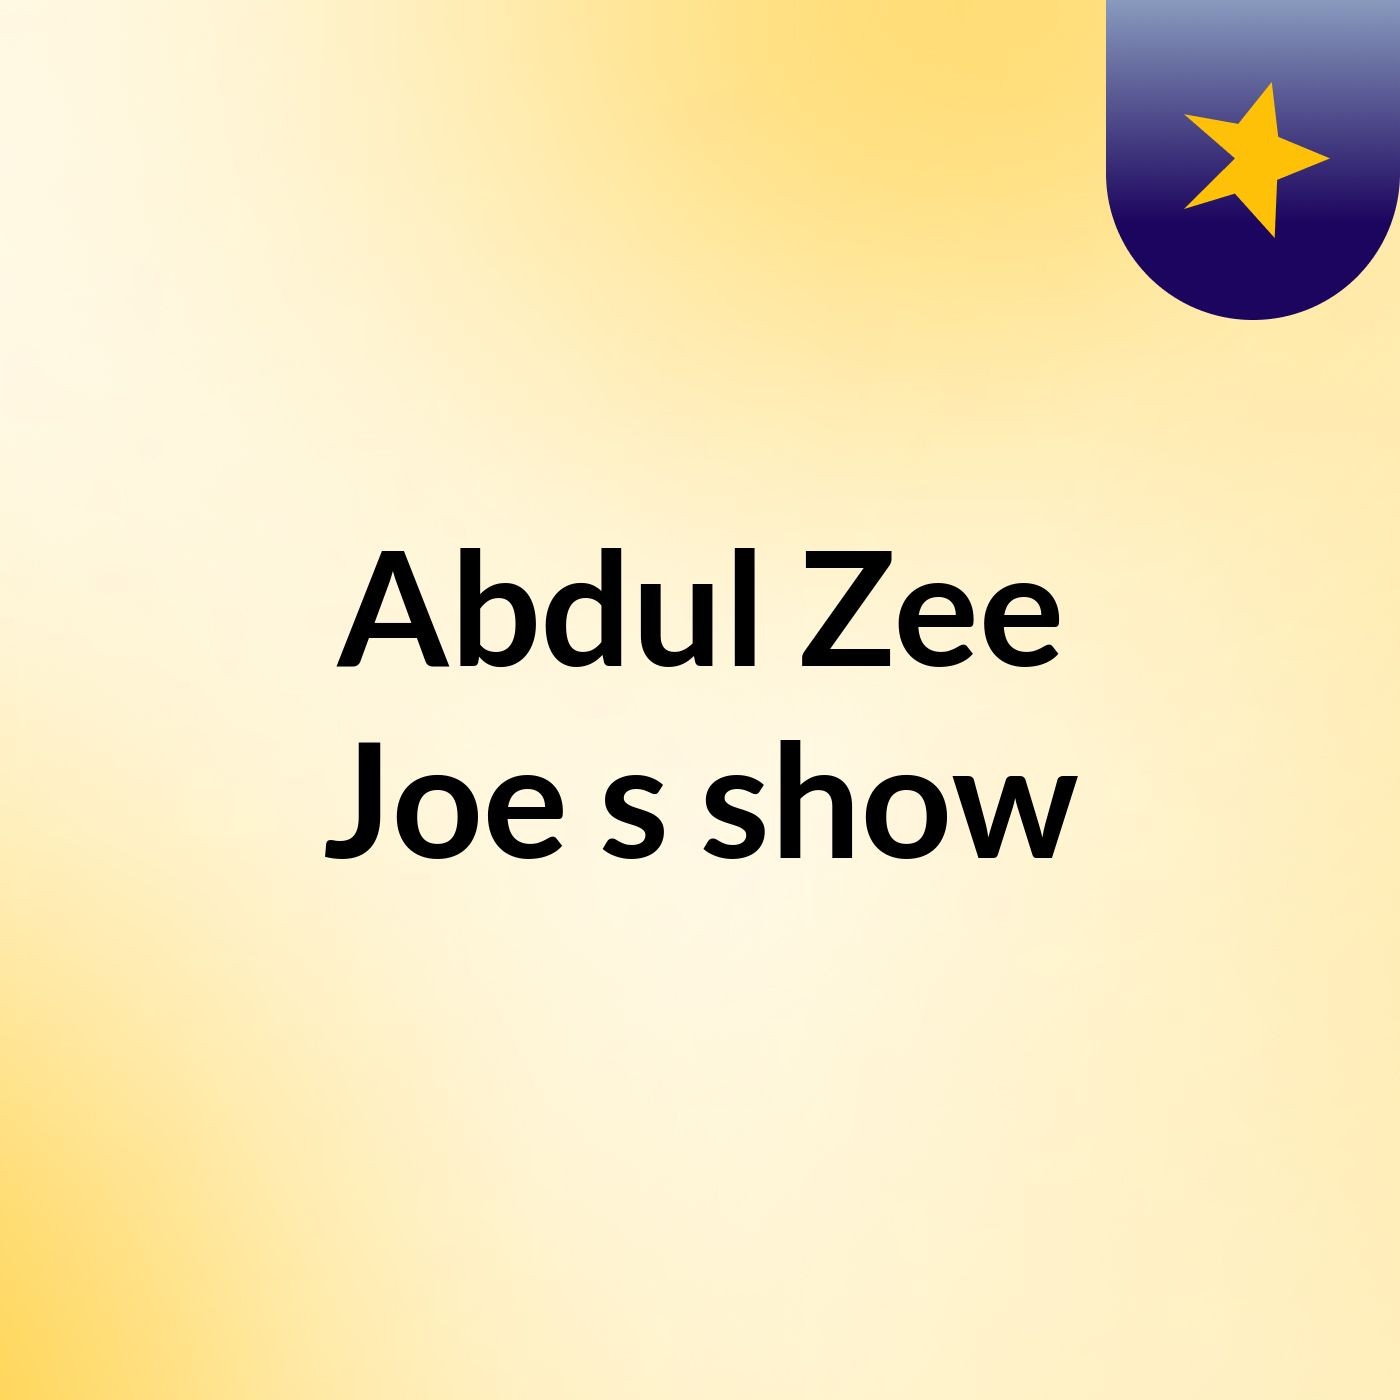 Abdul Zee Joe's show